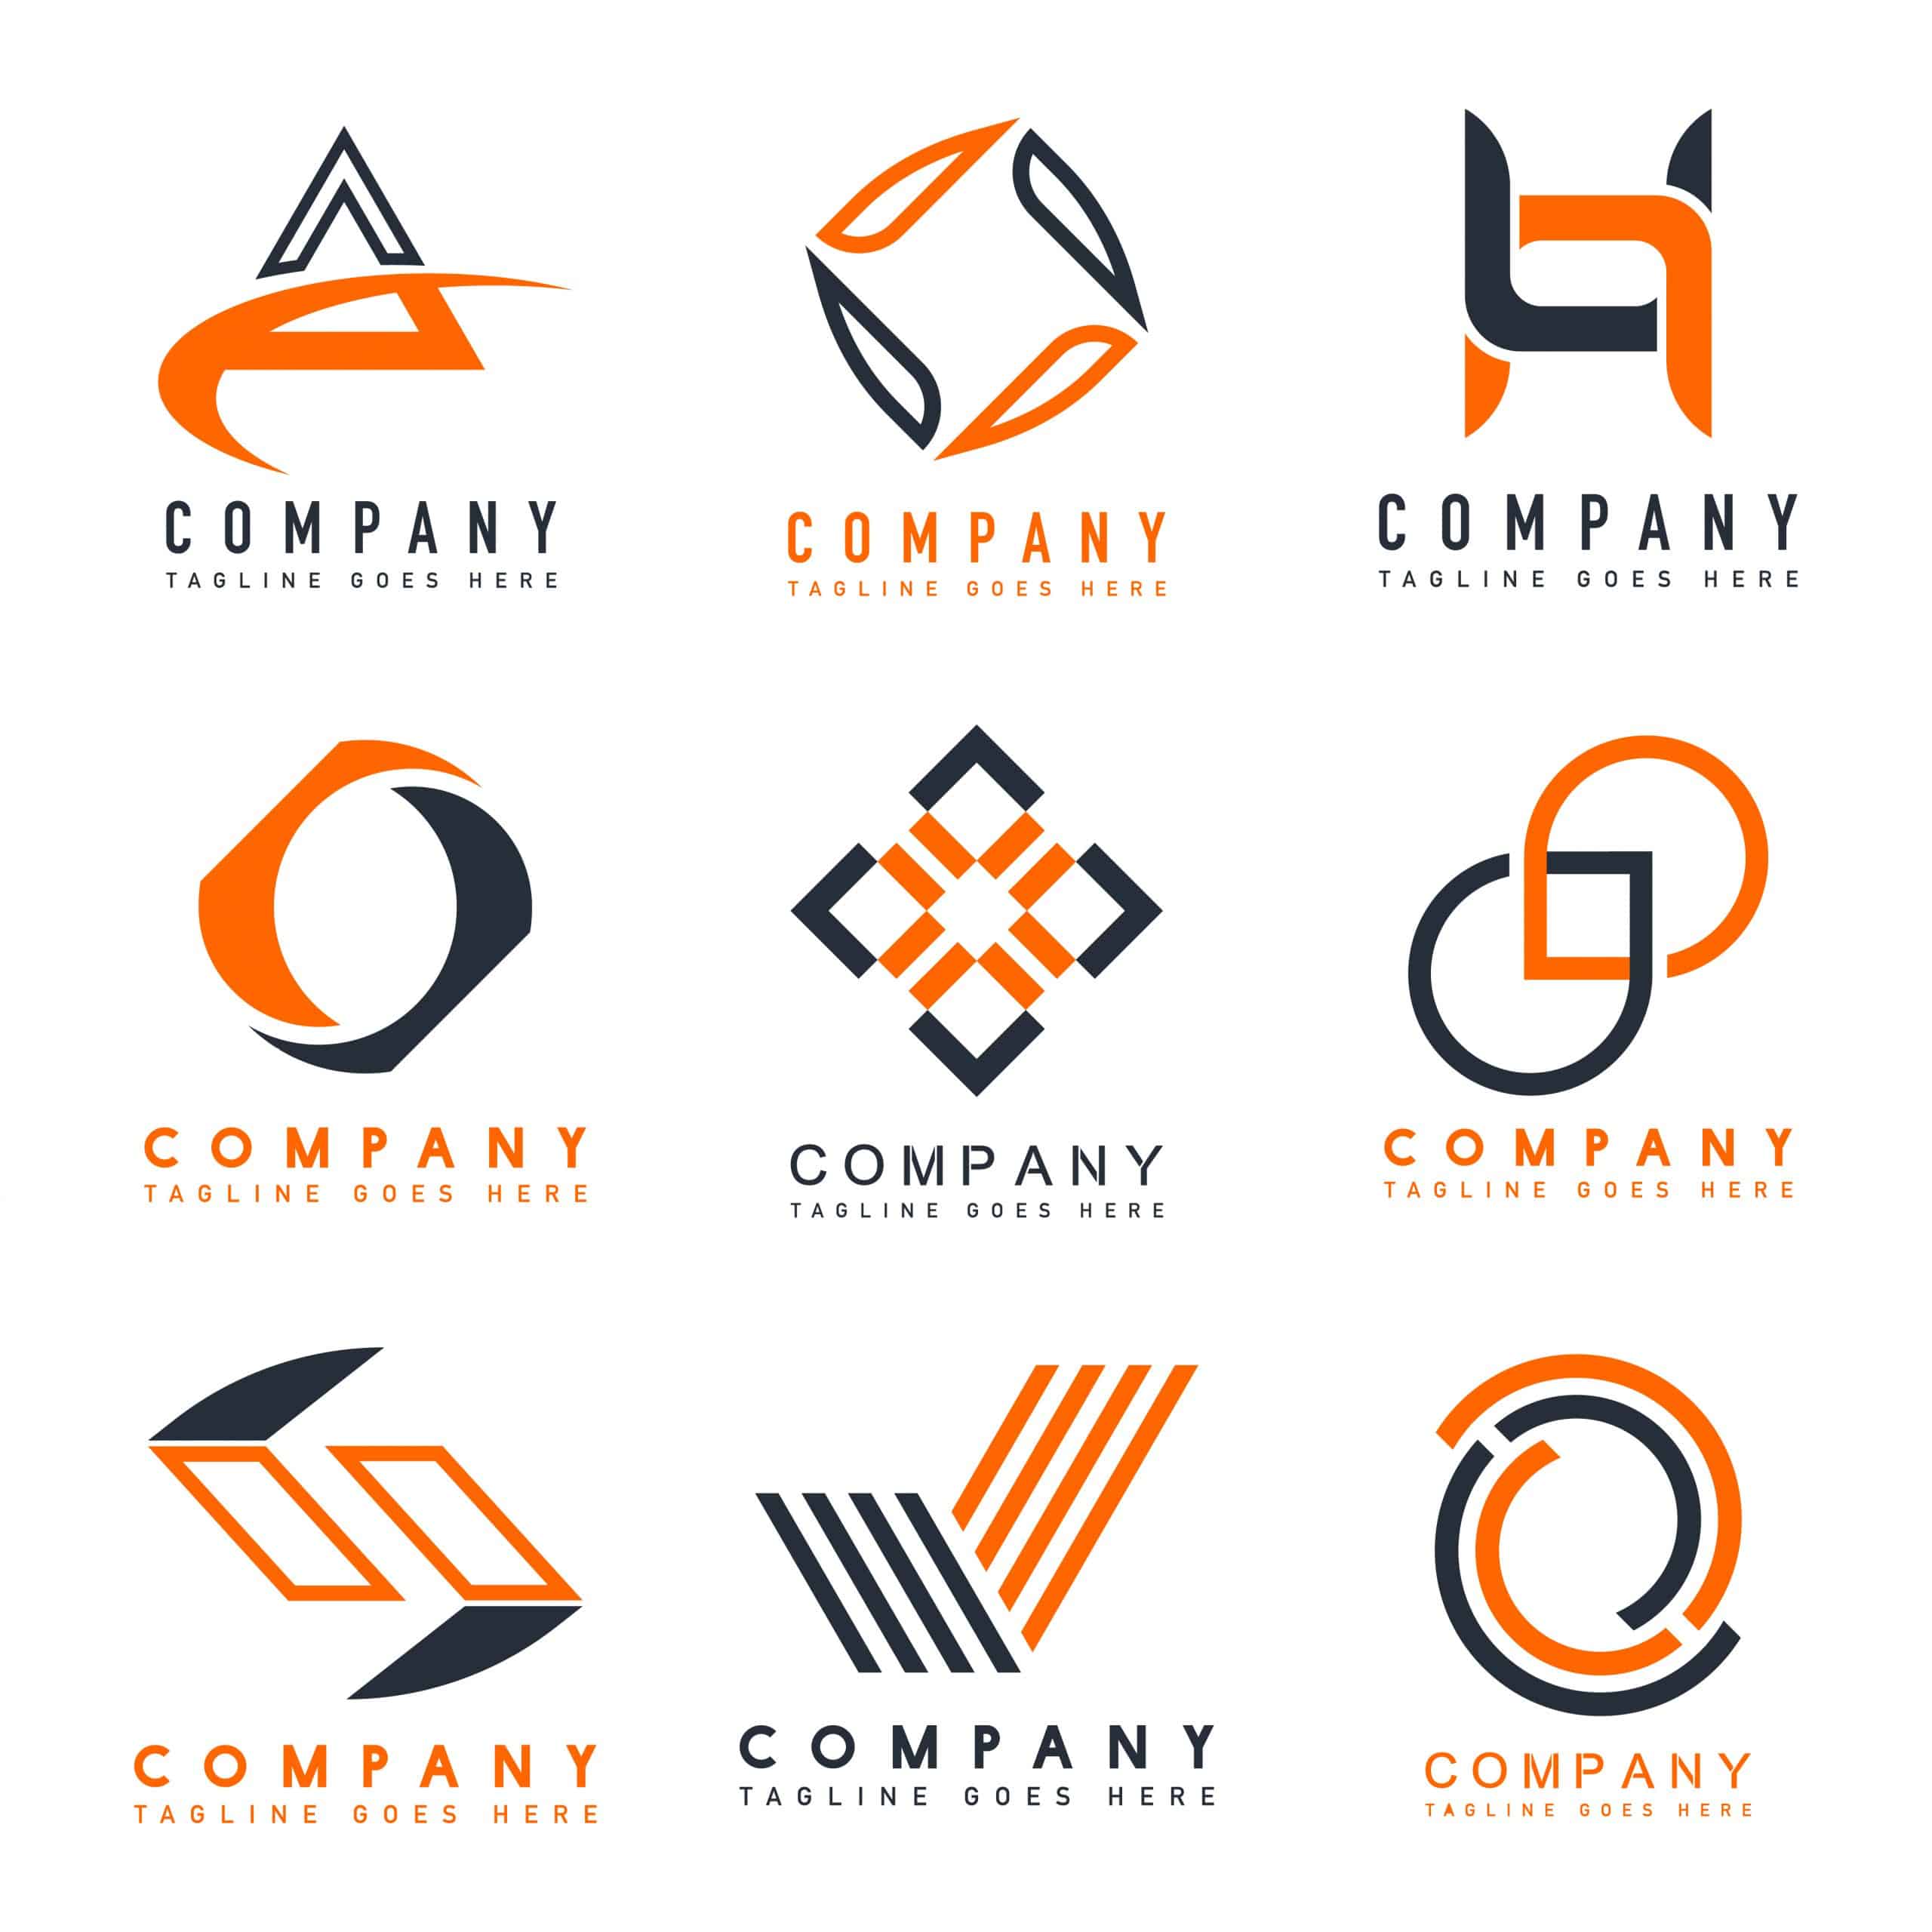 best logos ever designed